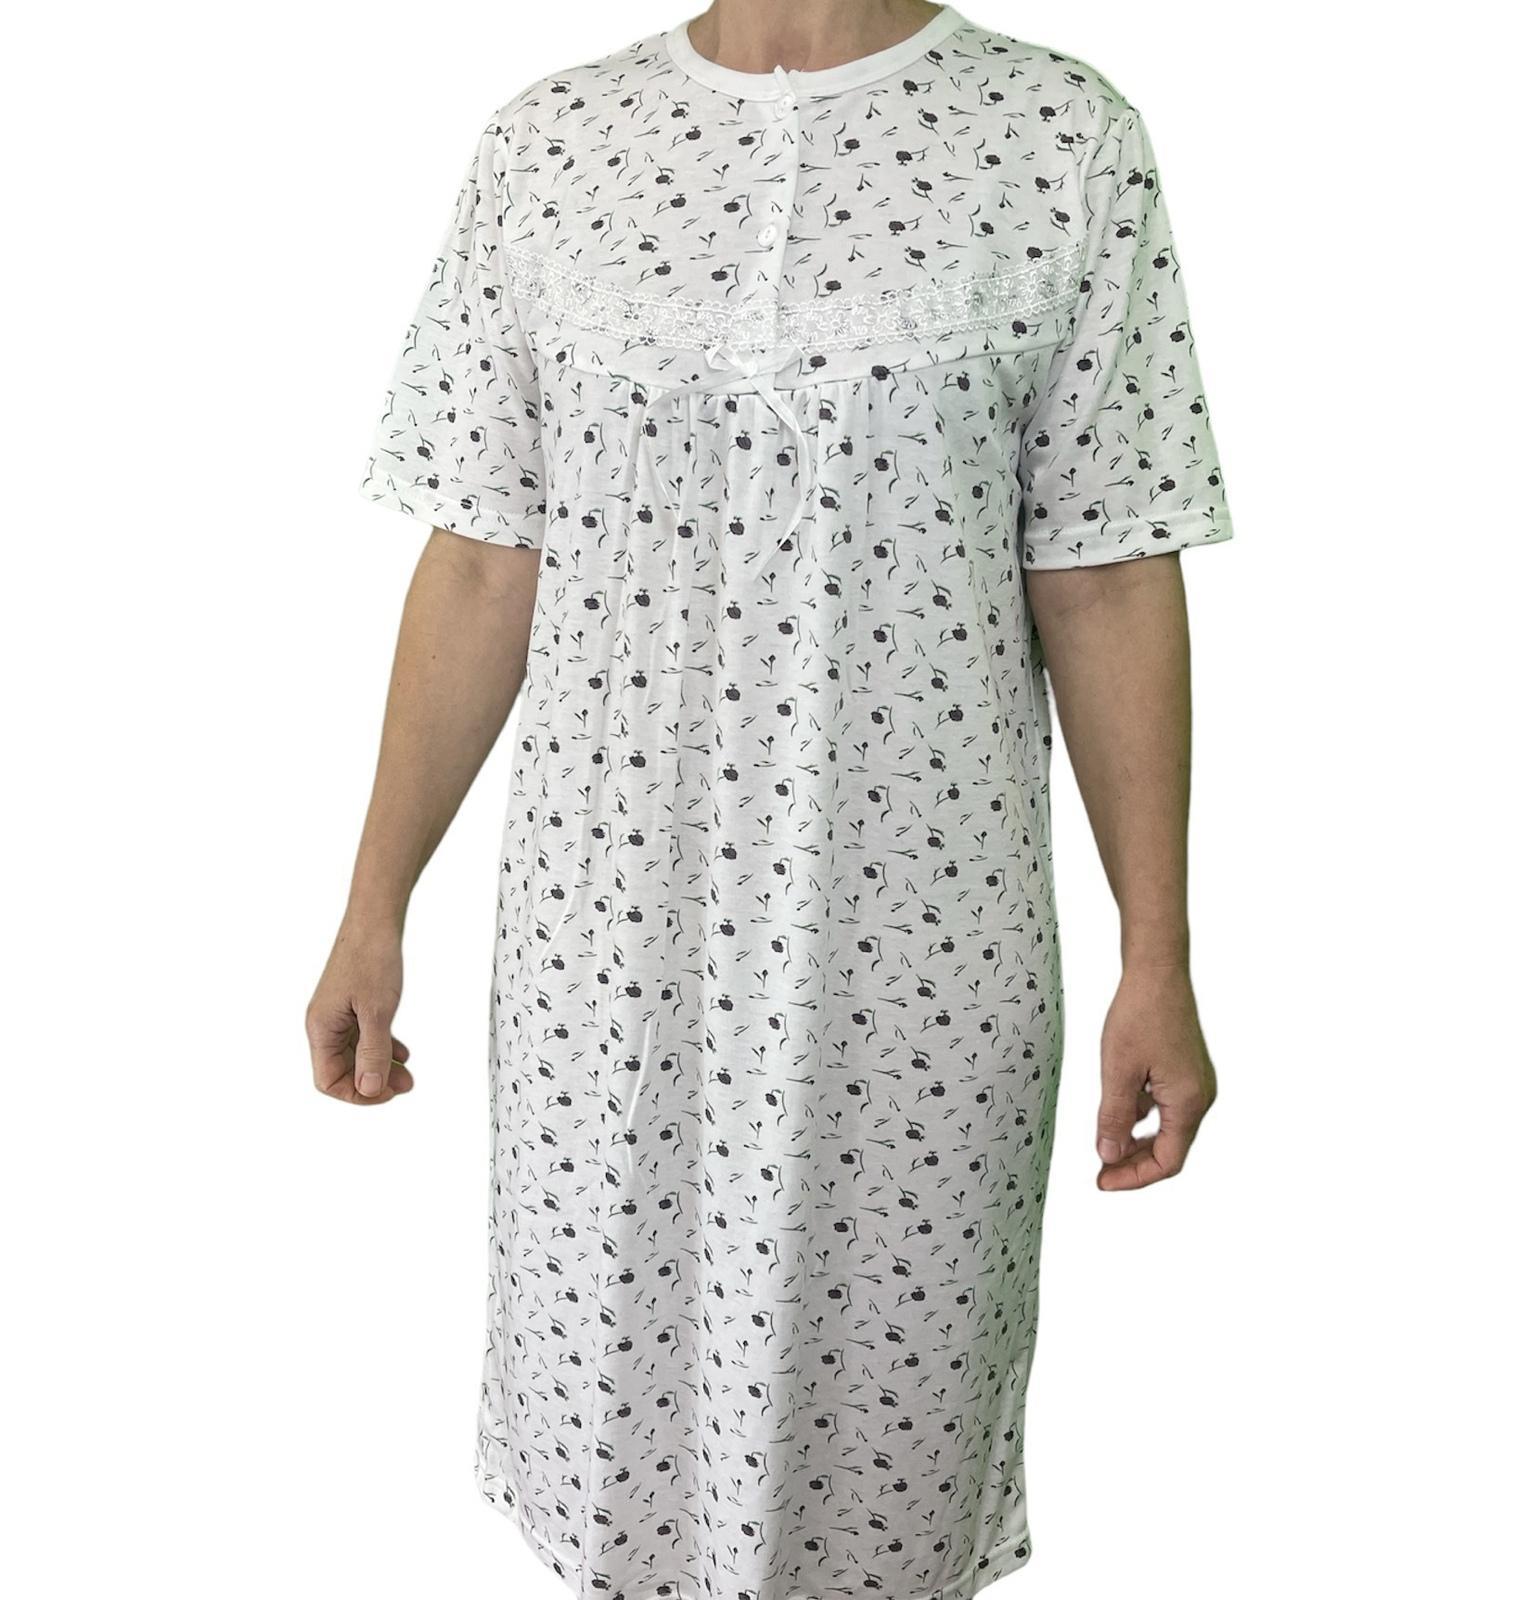 Womens Ladies Cotton Nightie Night Gown Slip Petticoat PJs Sleepwear Dress - White/Purple - 14